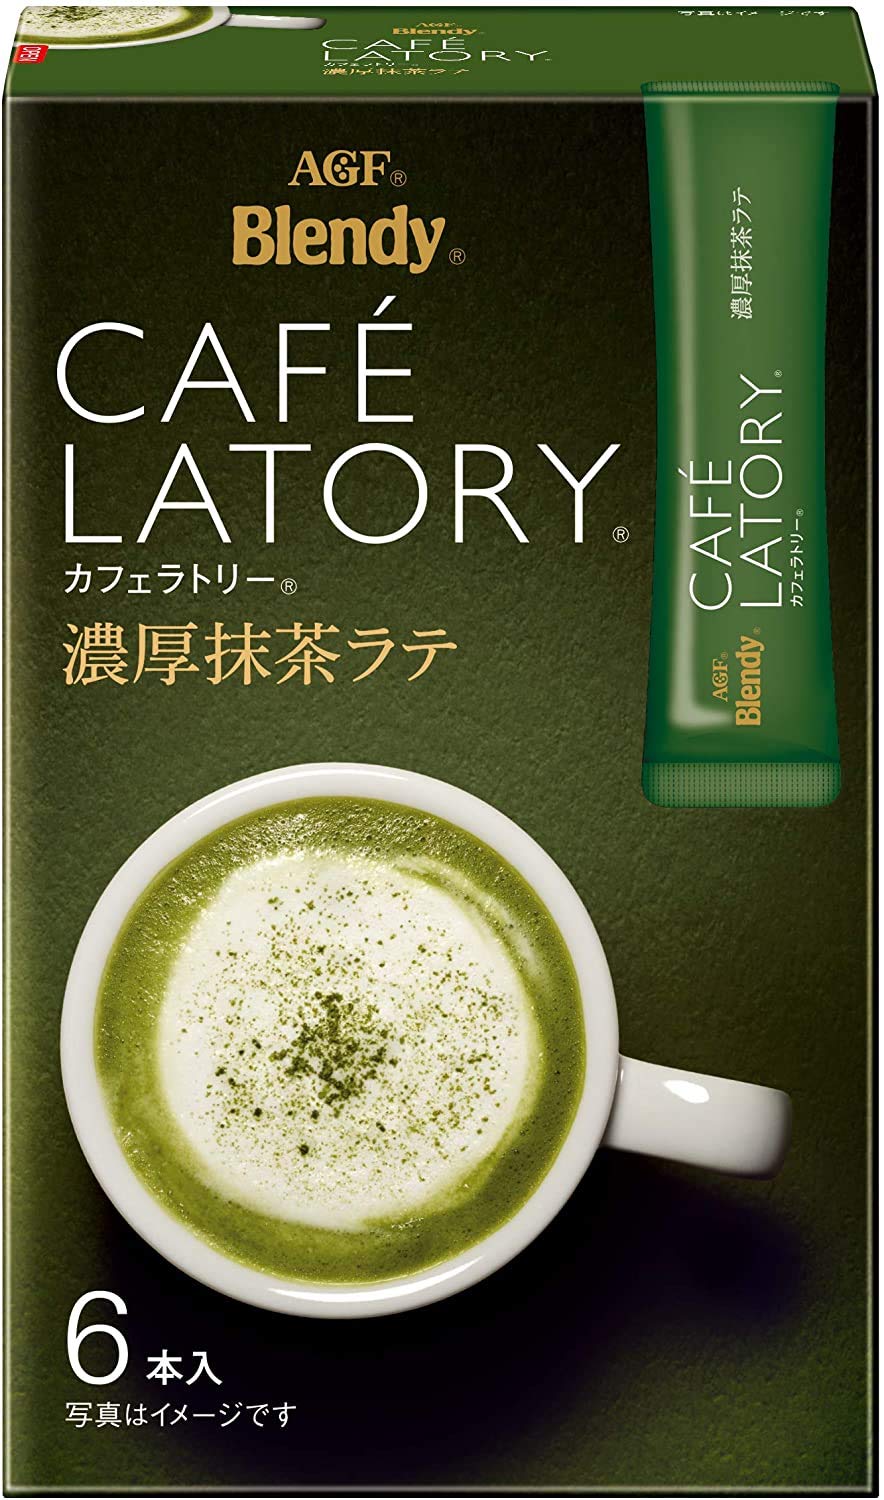 AGF Blendy Cafelatory Matcha Latte Net Wt.2.53oz (5 pack)